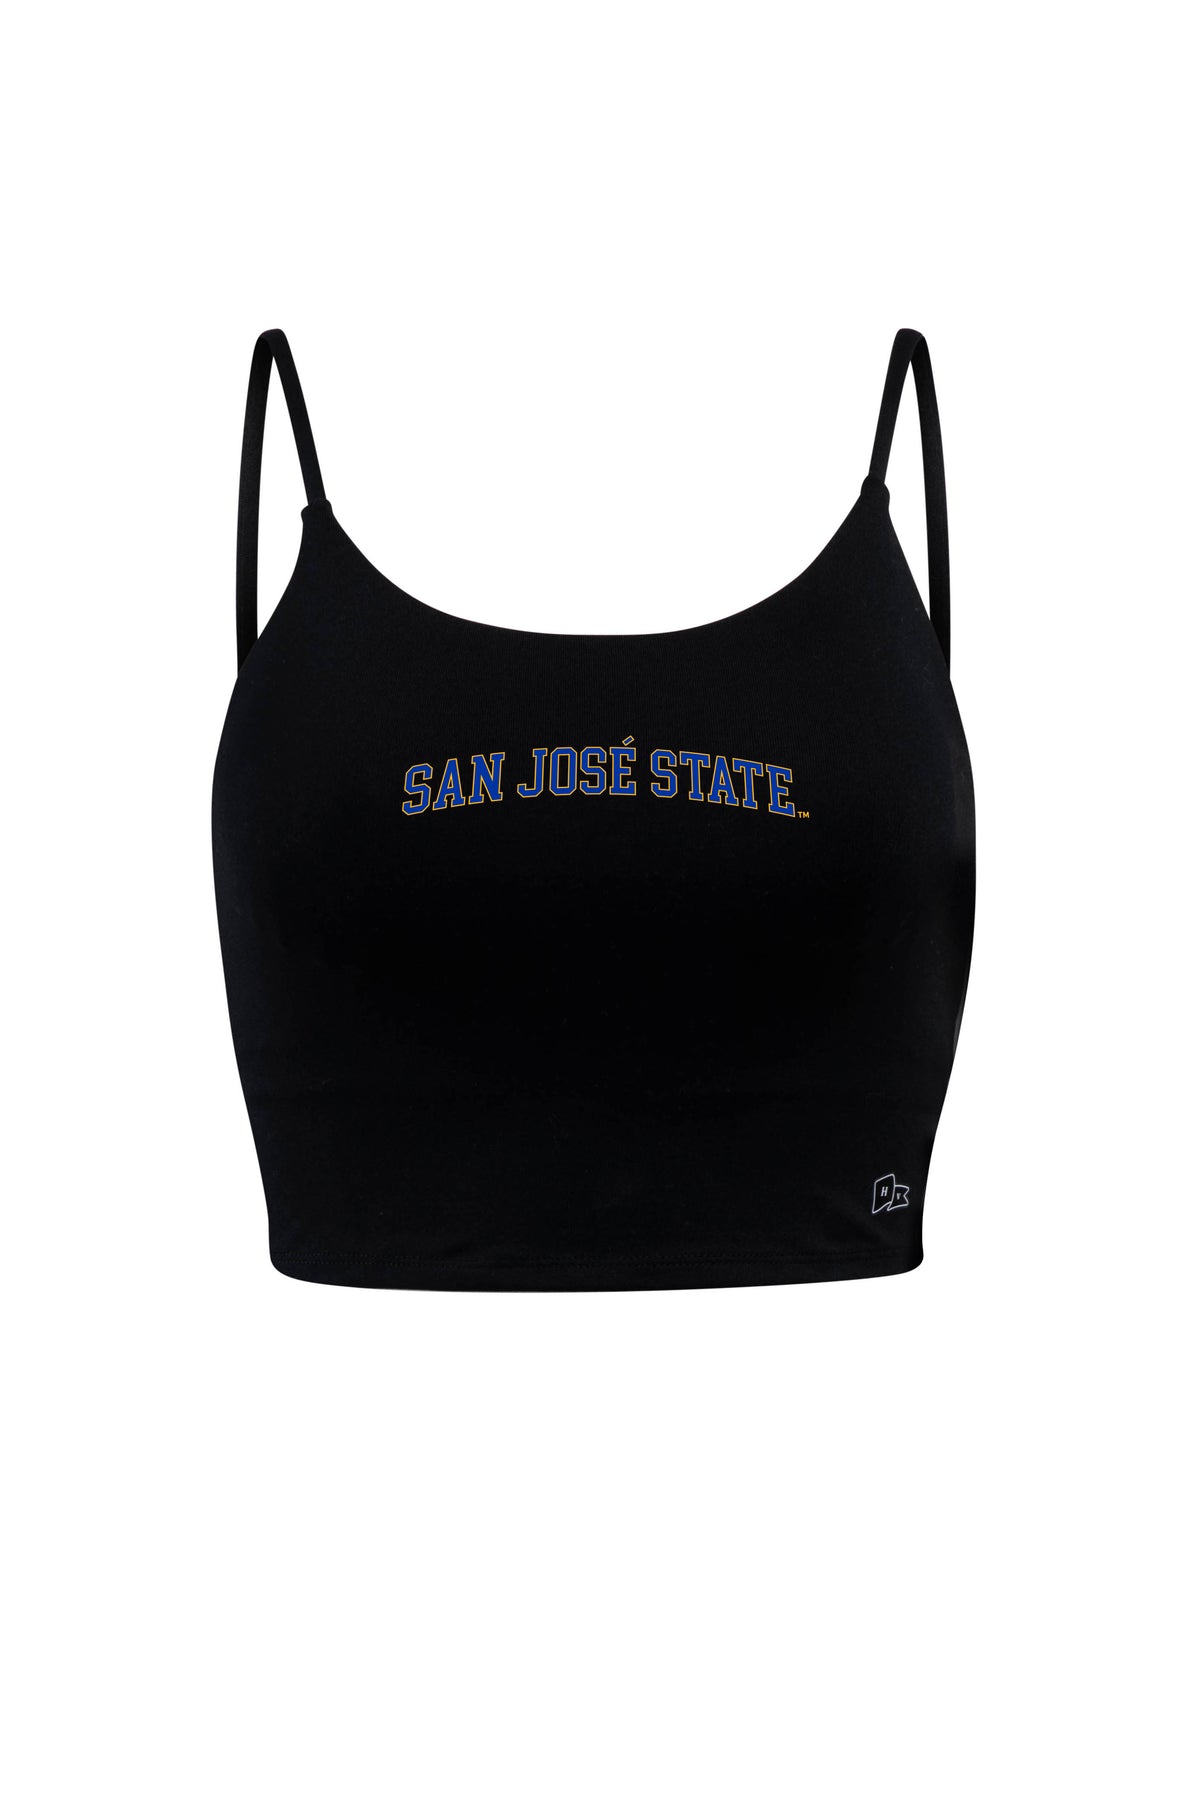 San Jose State University Bra Tank Top